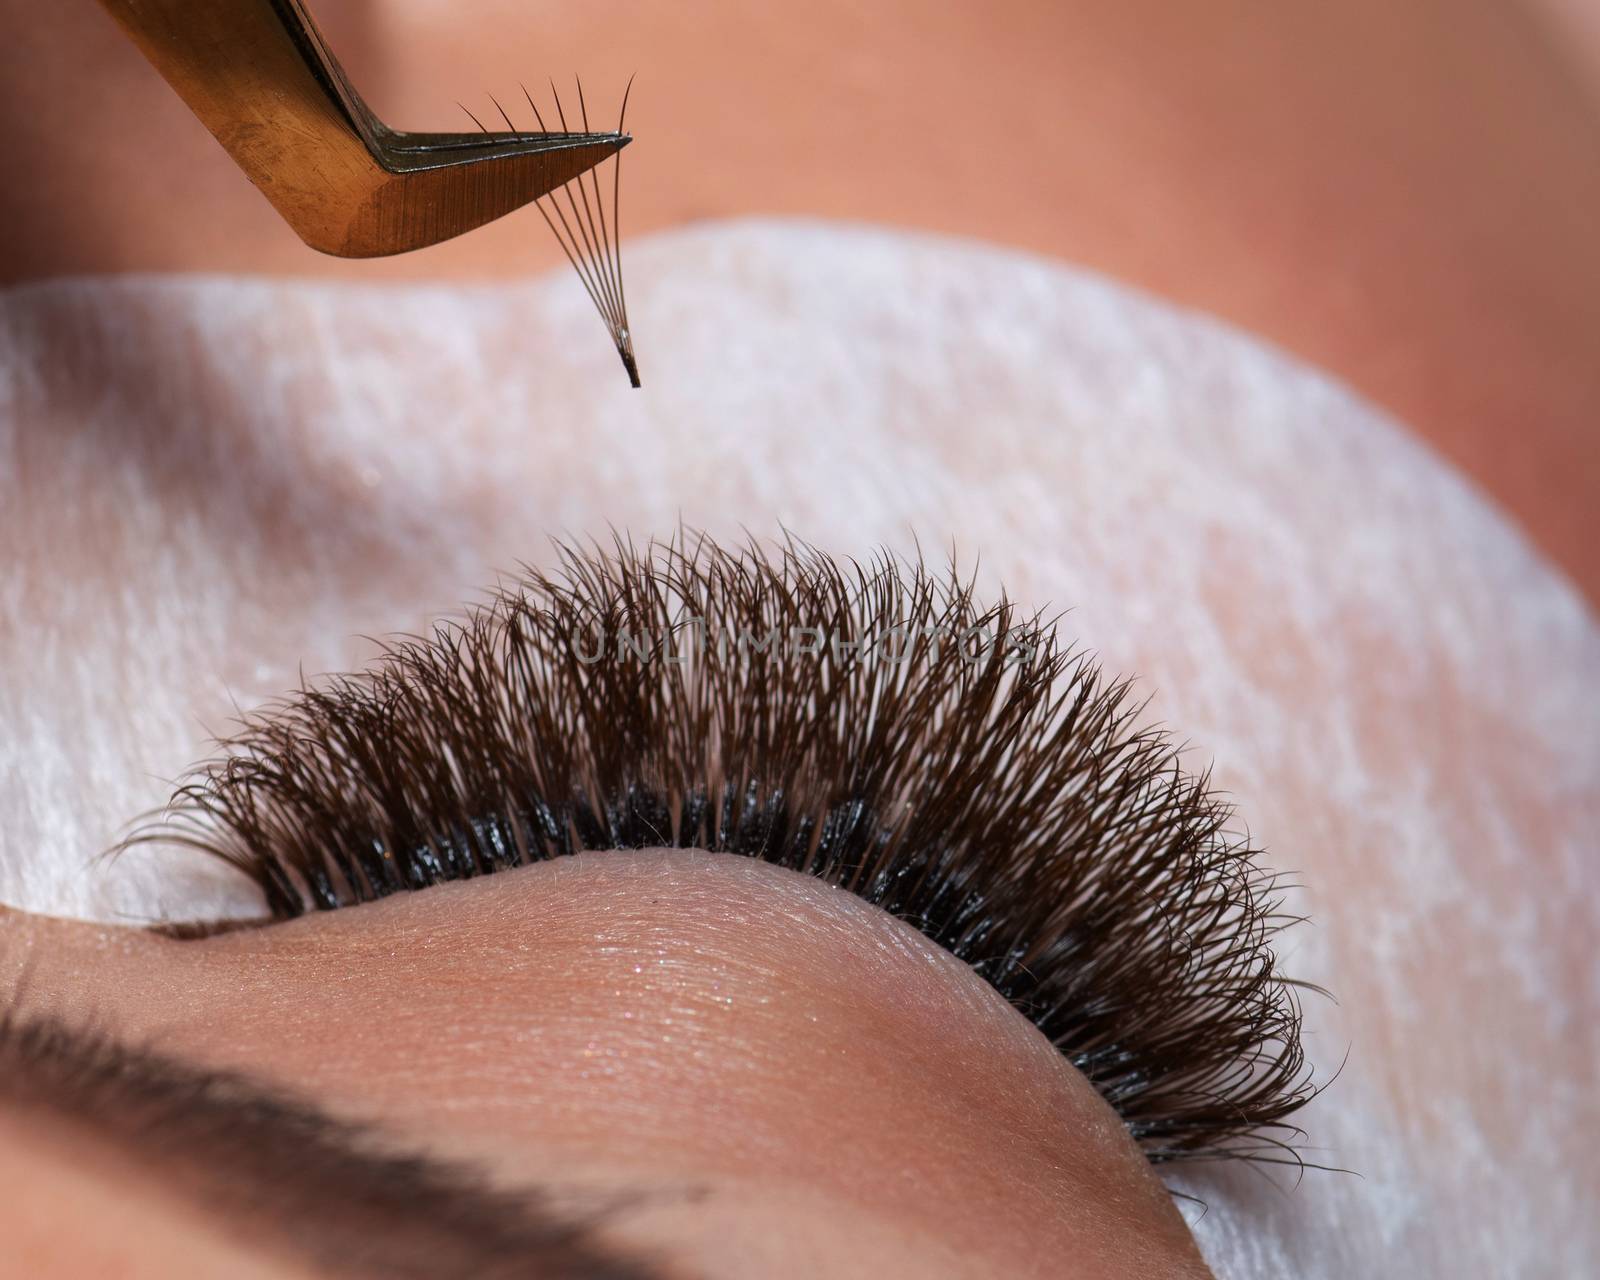 Eyelash Extension Procedure. Woman Eye with Long Eyelashes by adamr